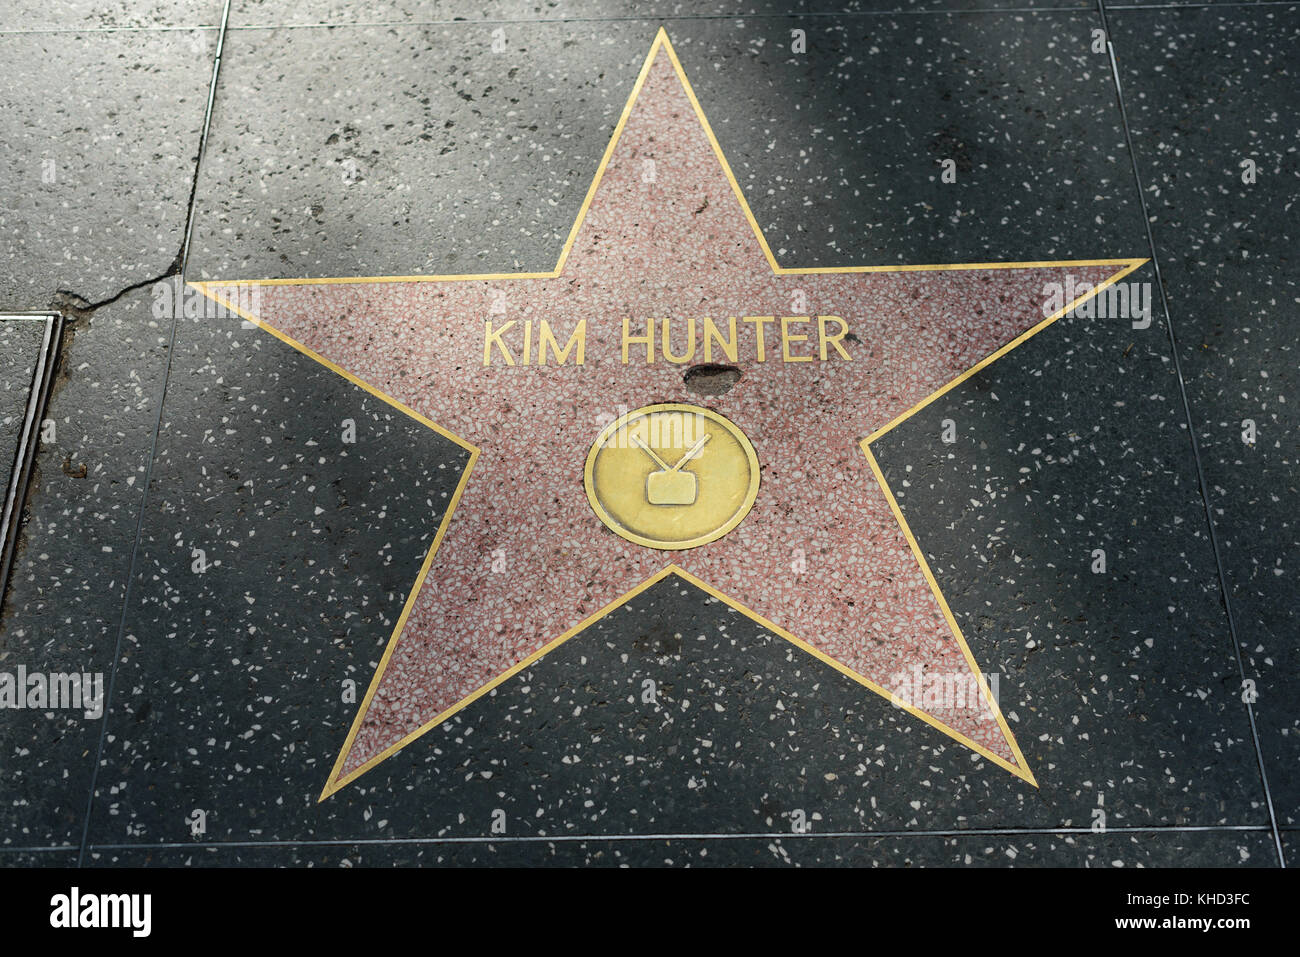 HOLLYWOOD, CA - DEZEMBER 06: Kim Hunter Star auf dem Hollywood Walk of Fame in Hollywood, Kalifornien am 6. Dezember 2016. Stockfoto